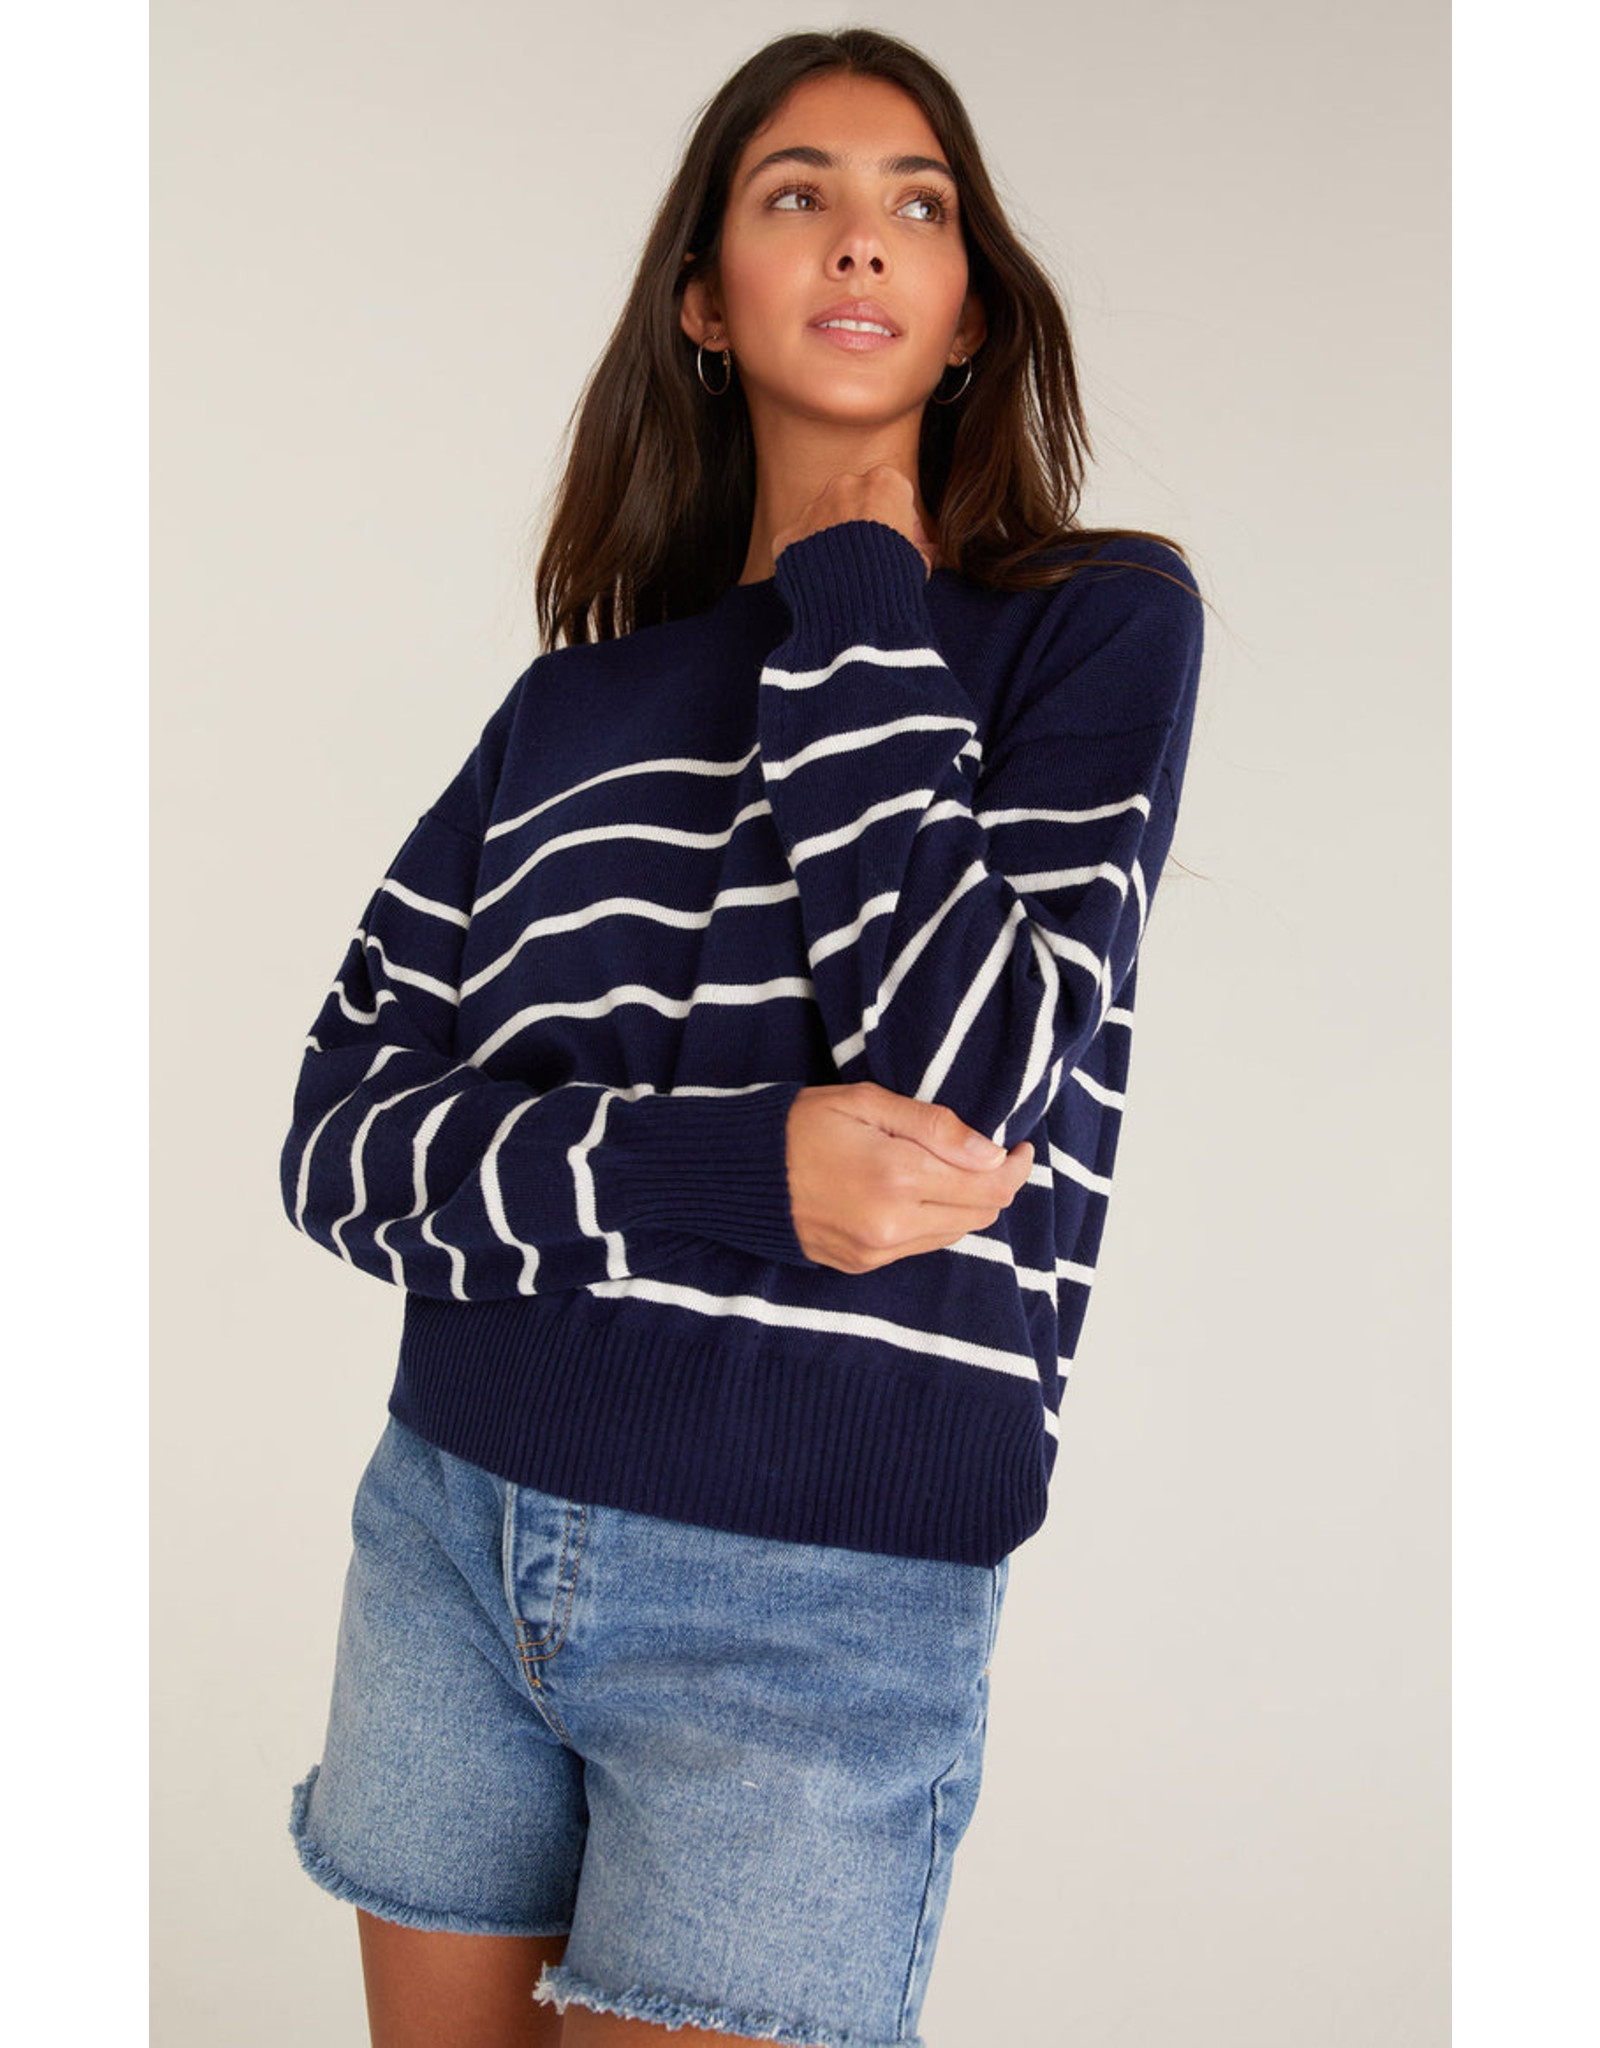 Z Supply - Oceana Sweater